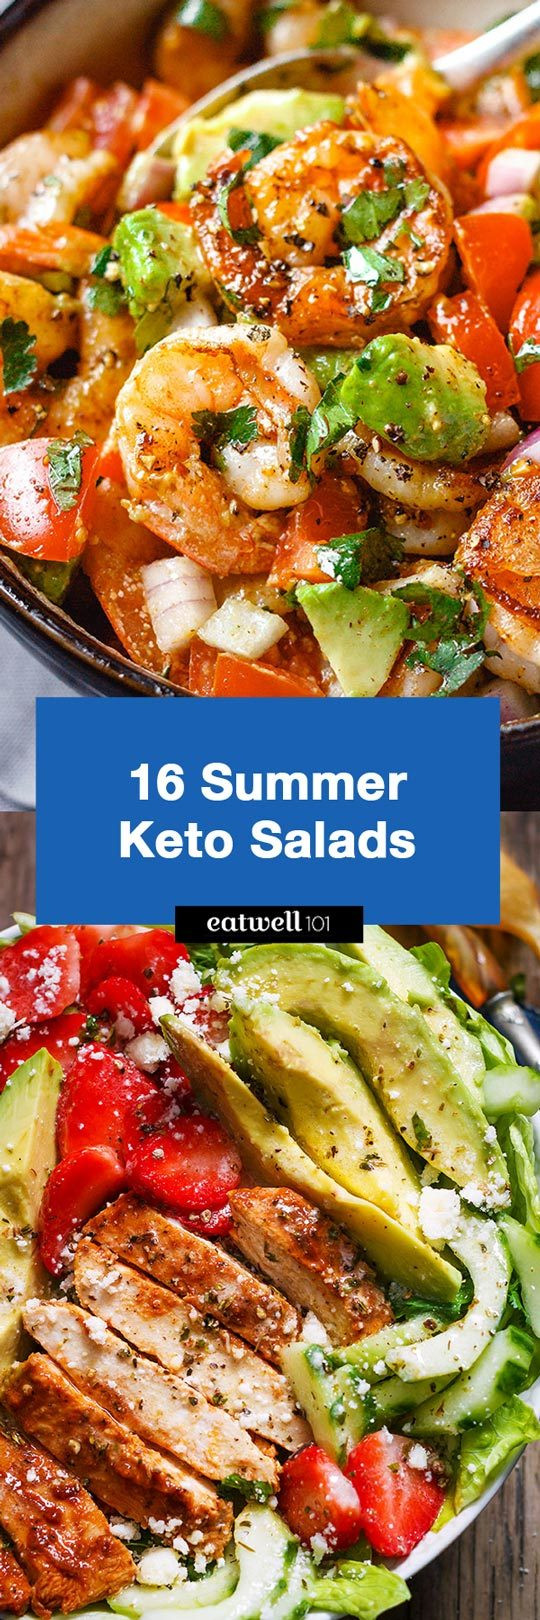 Summer Keto Salads
 Keto Salad Recipes 16 Best Summer Keto Salad Recipes